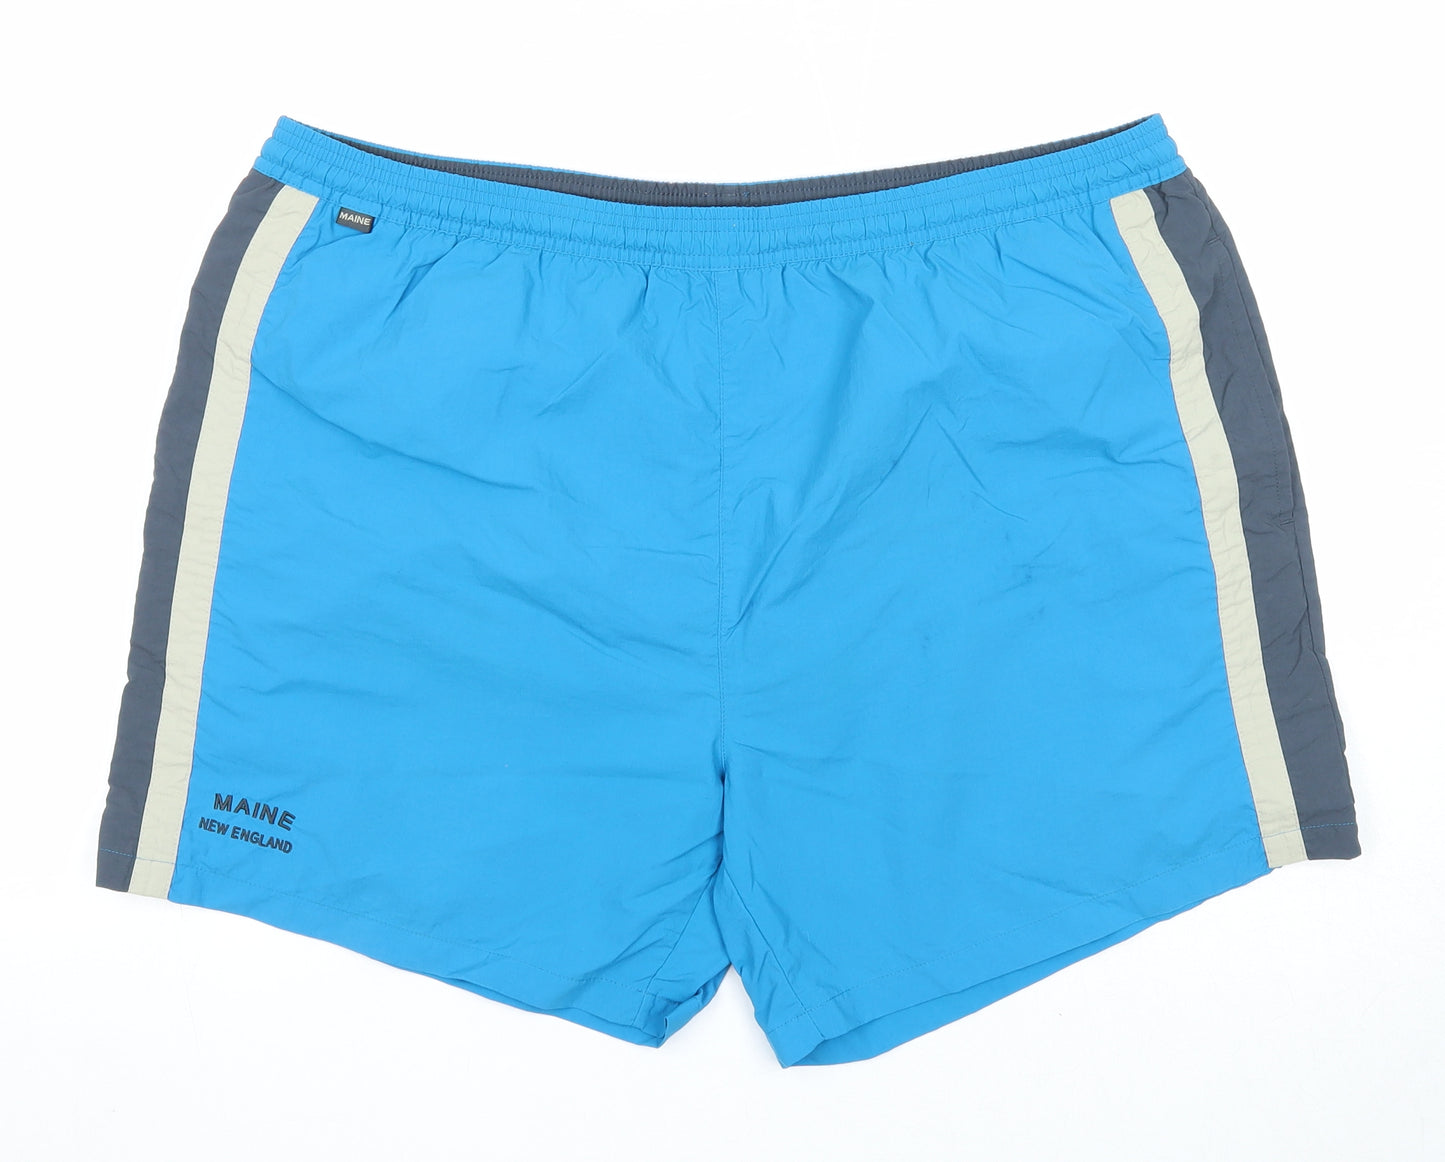 Maine New England Mens Blue Nylon Sweat Shorts Size L Regular Drawstring - Swim Shorts